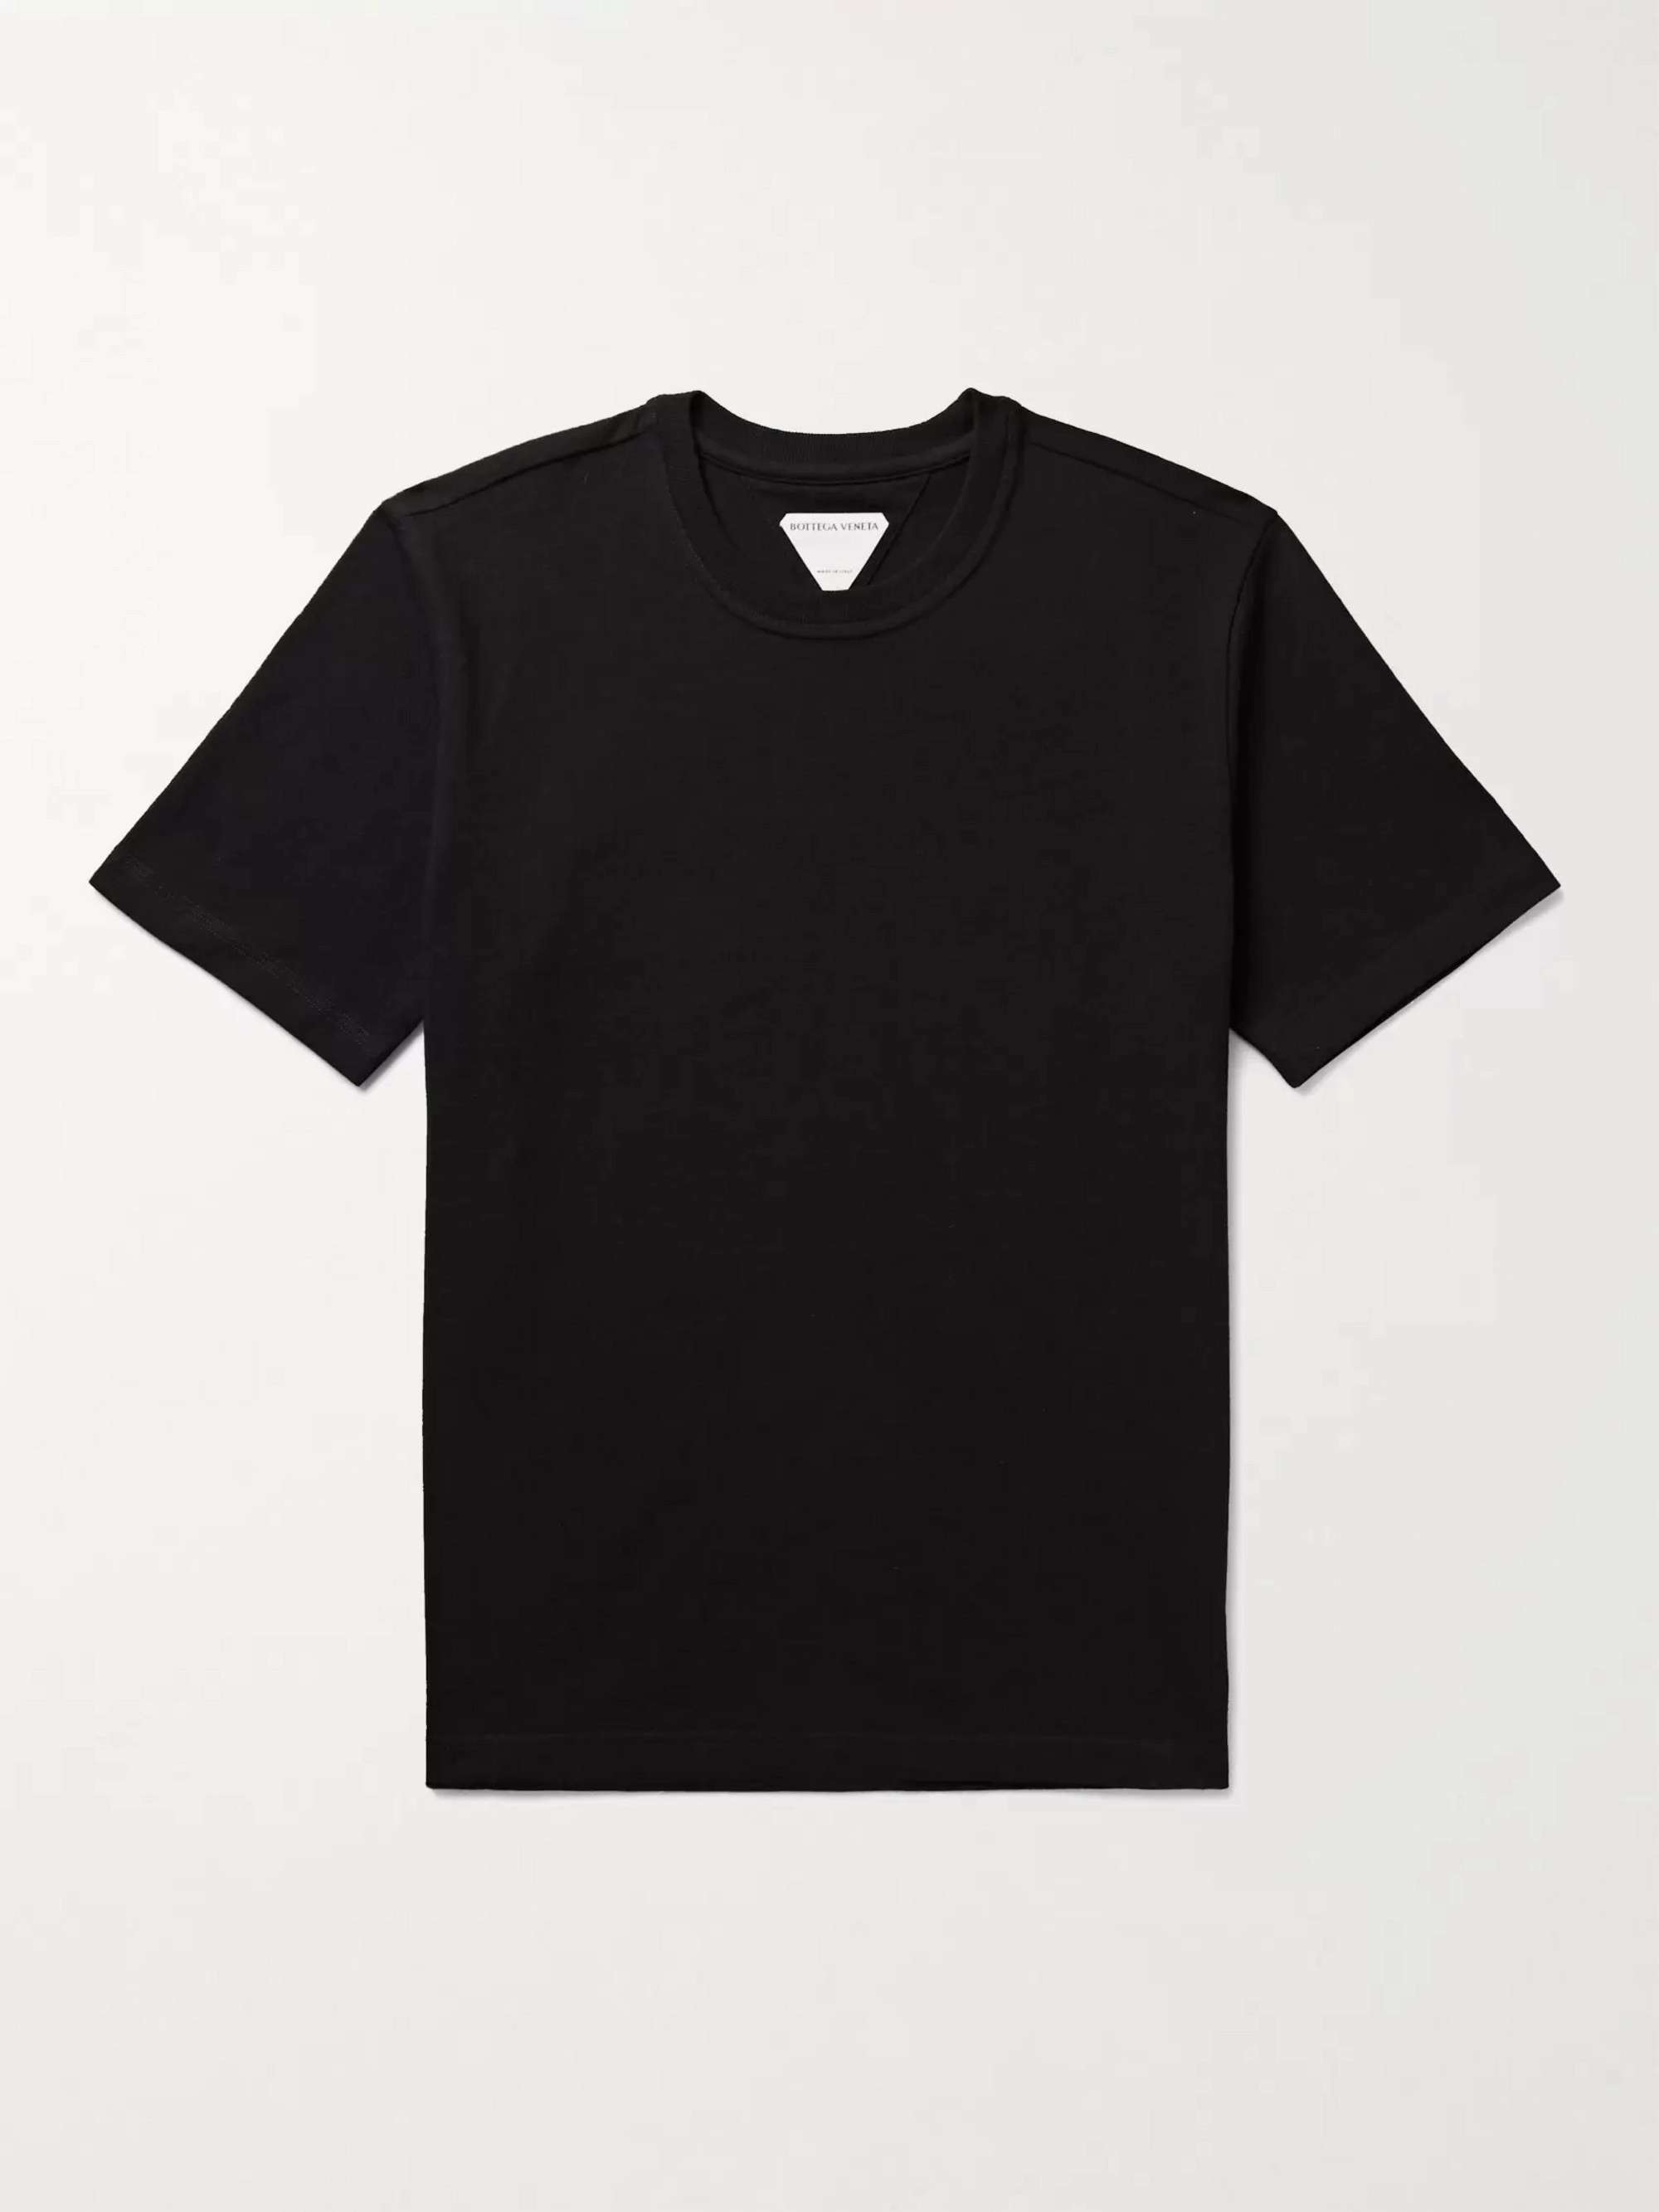 BOTTEGA VENETA: Overlock t-shirt - Black  Bottega Veneta t-shirt  690713V1P70 online at